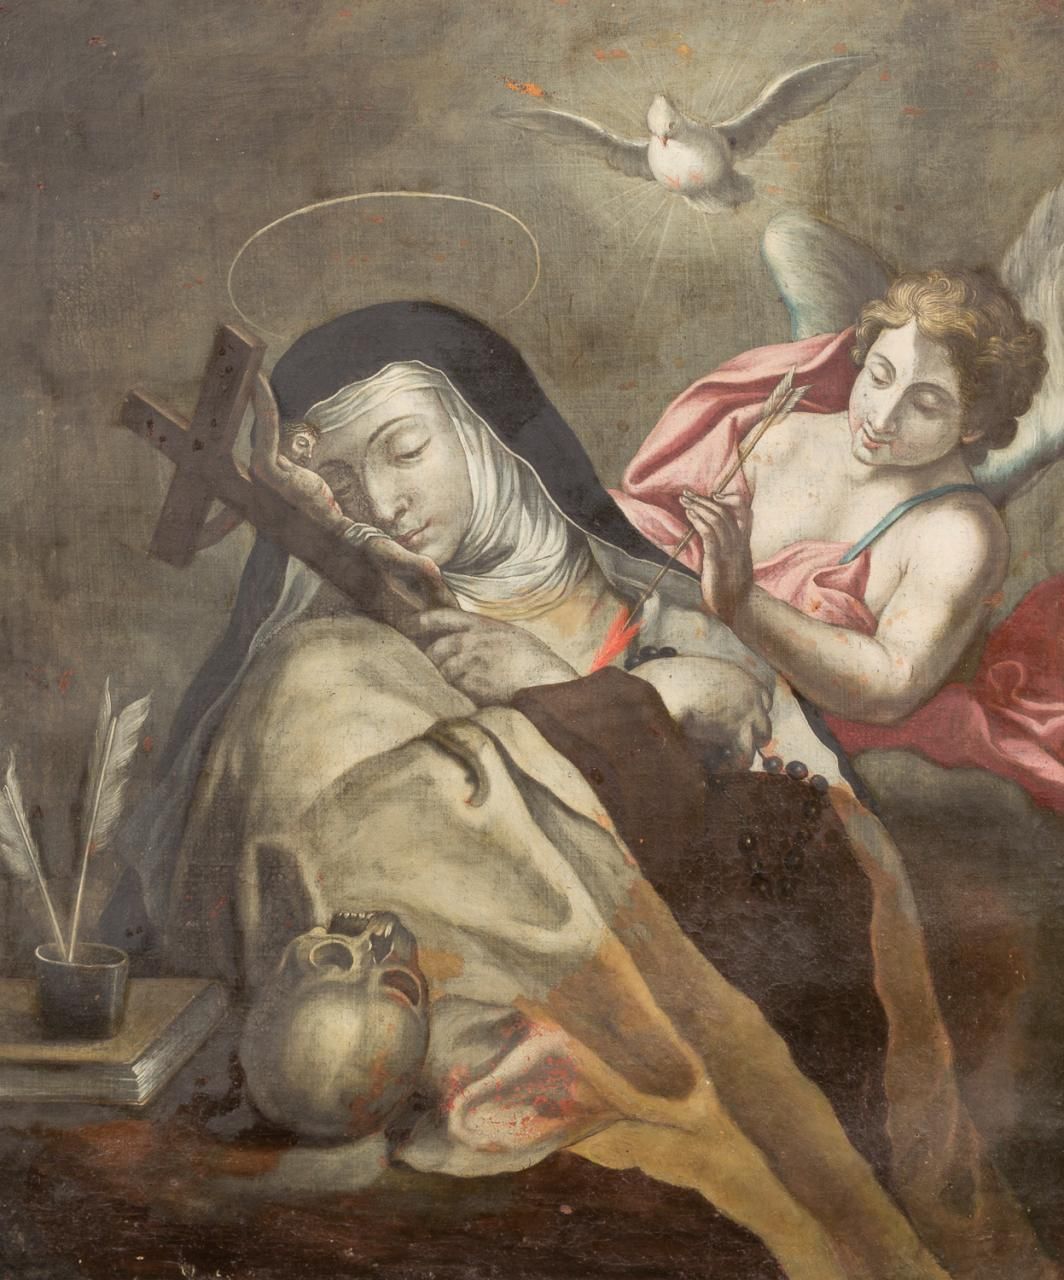 ESCUELA ITALIANA, S. XVII Ecstasy of Saint Teresa
Oil on canvas
77 x 64 cm